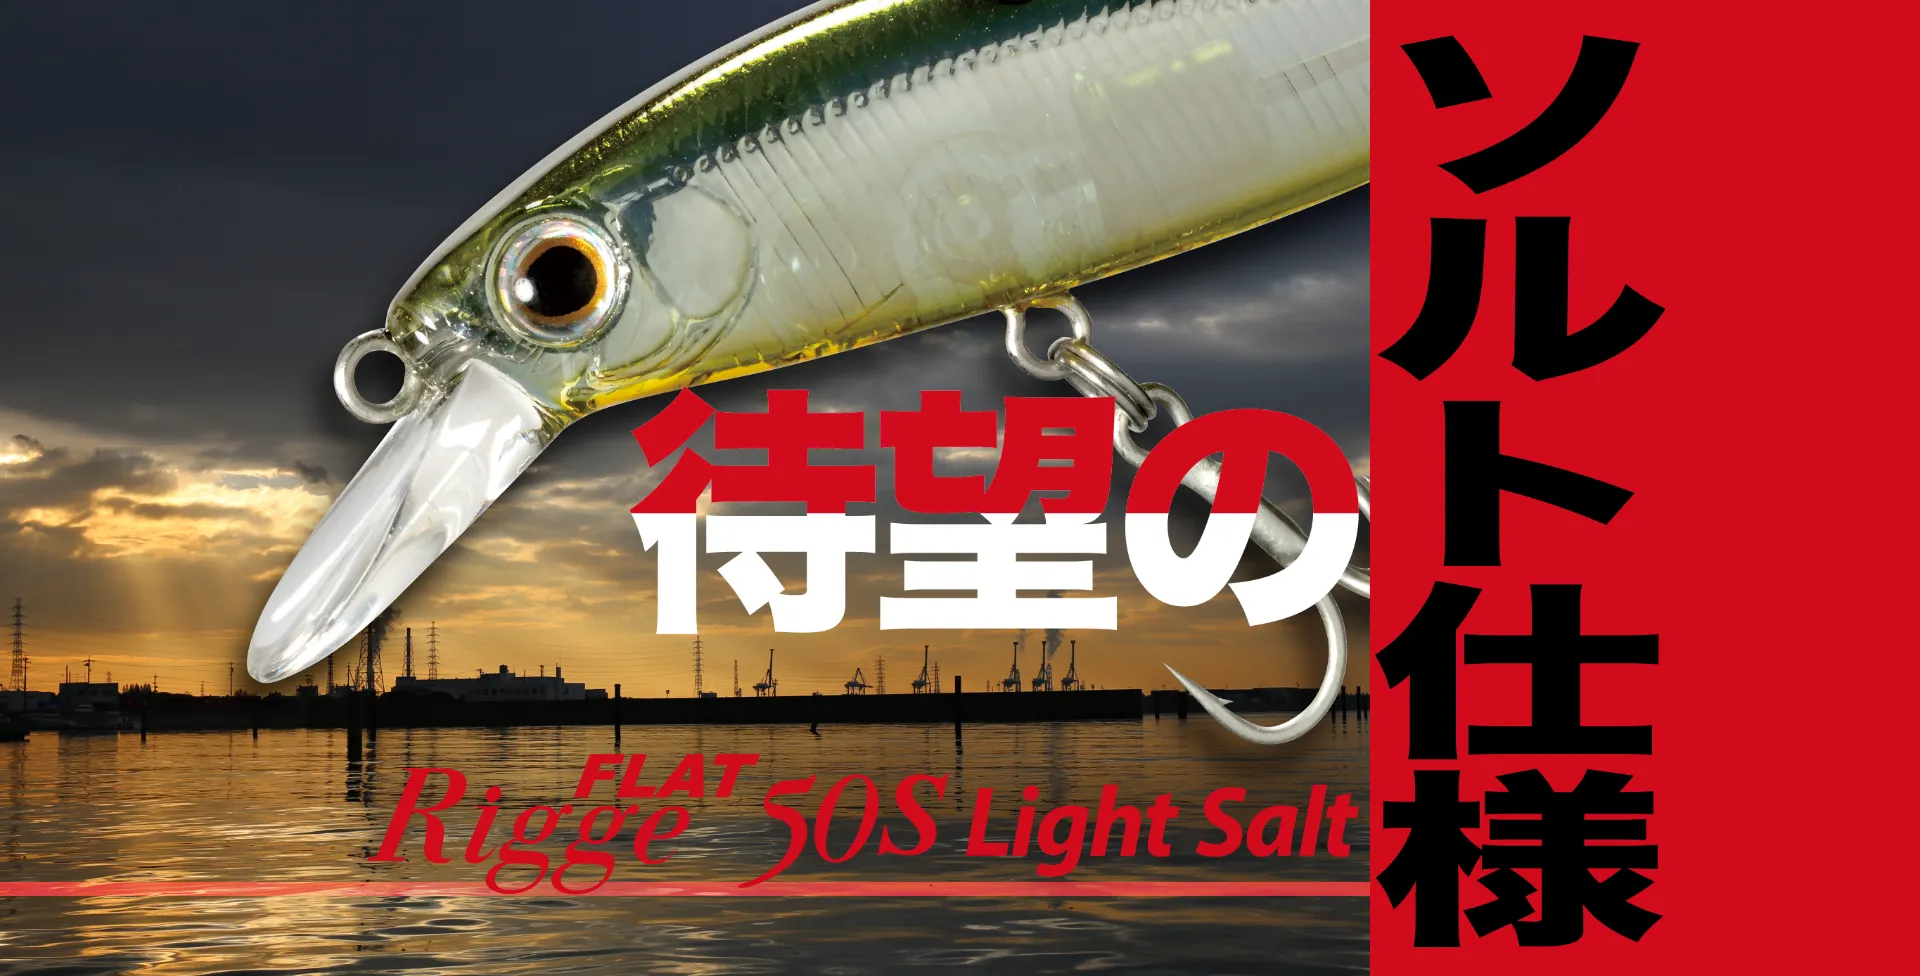 Rigge FLAT 50S Light Salt | スペシャルコンテンツ | ZIPBAITS ジップベイツ